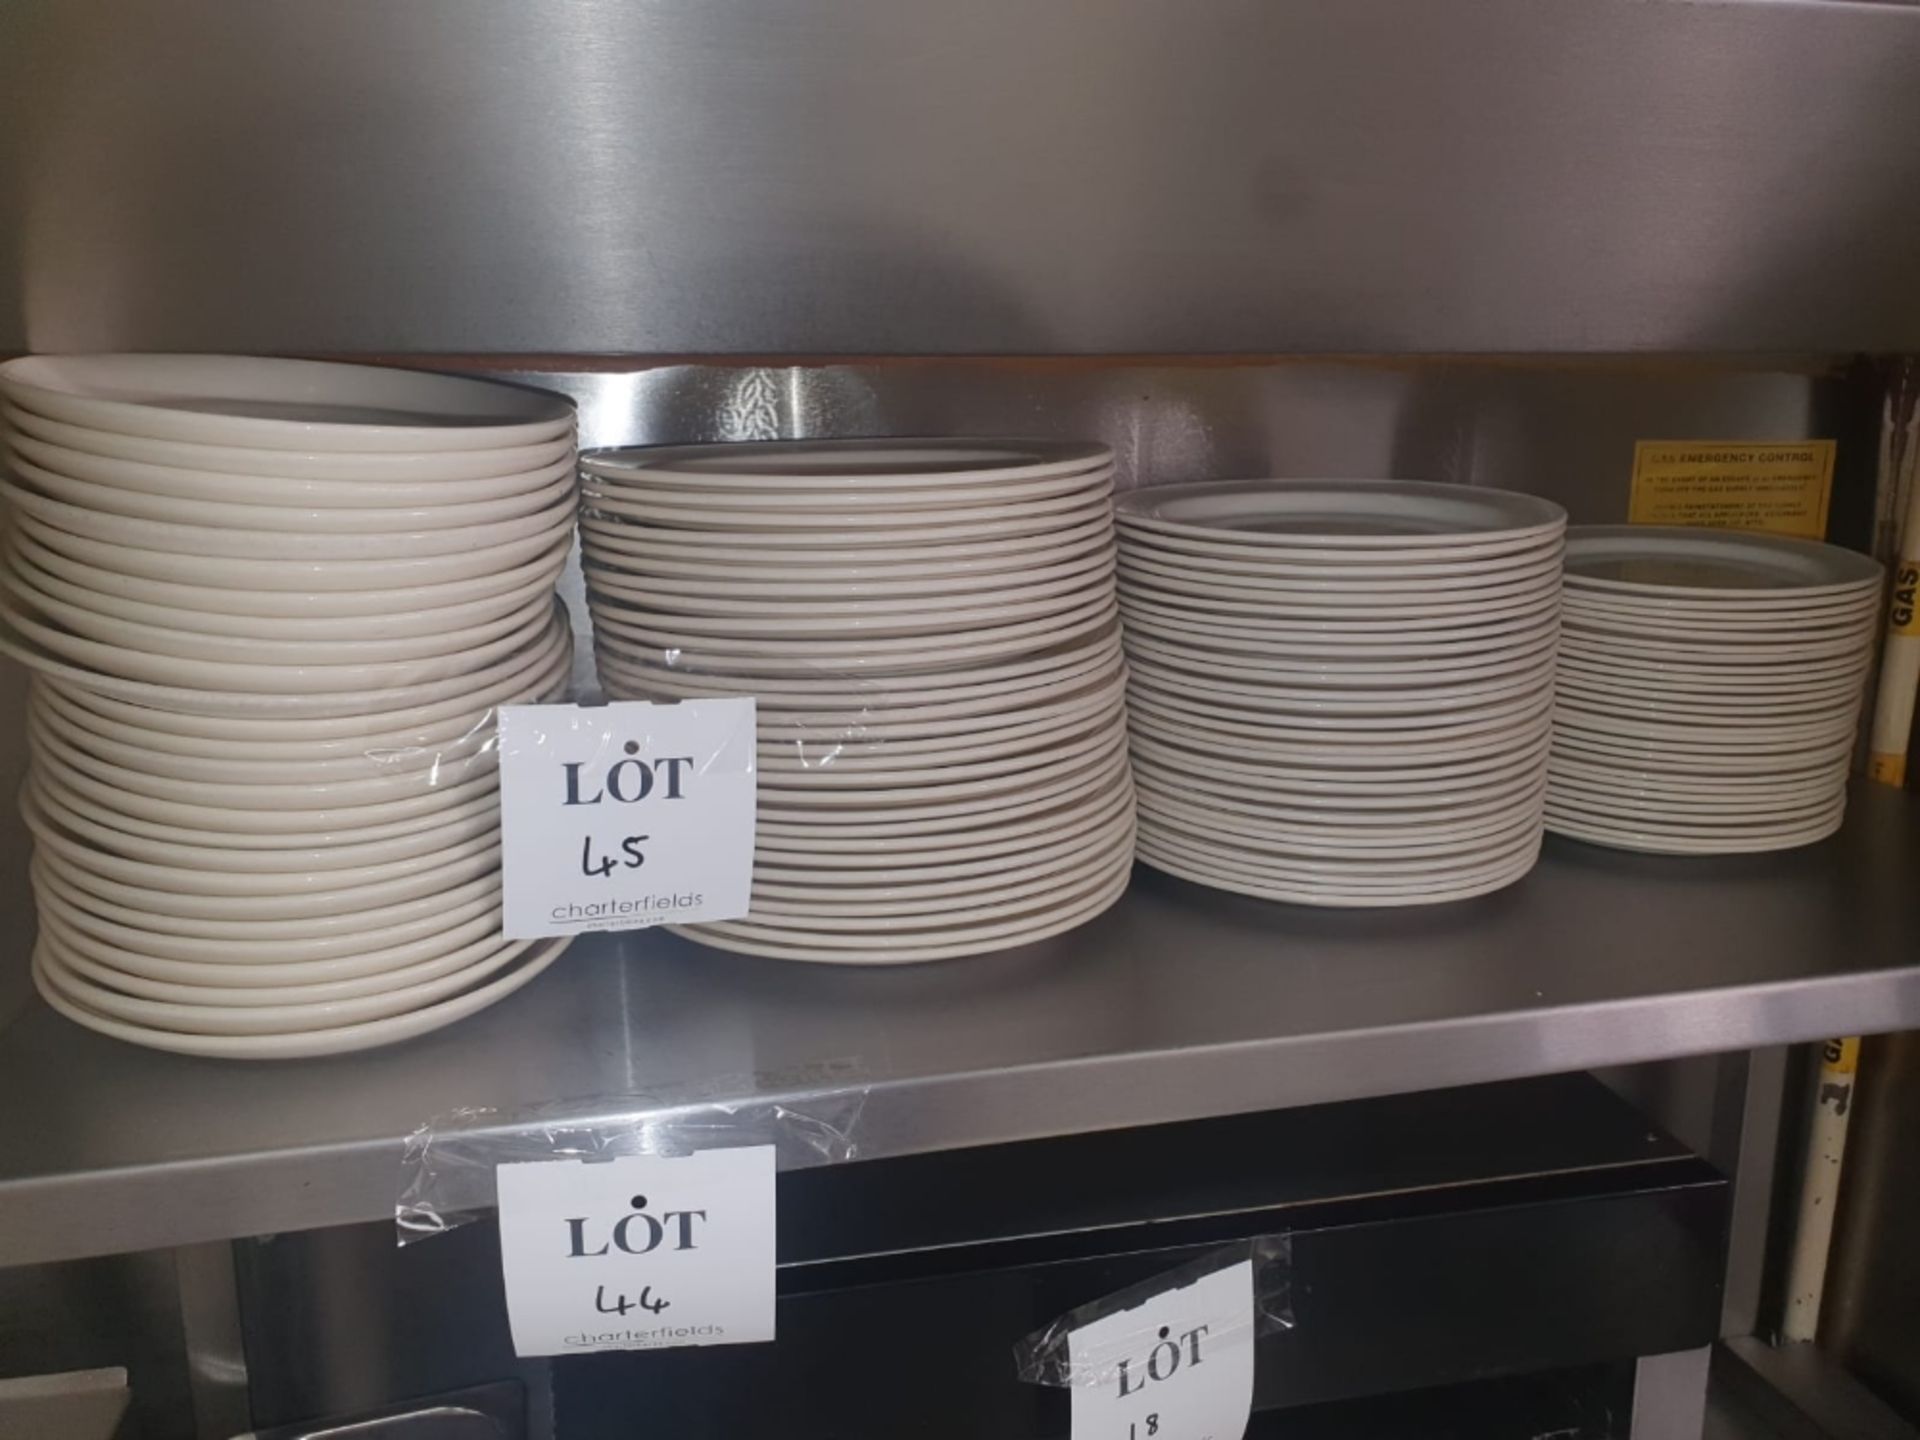 Large quantity of plates